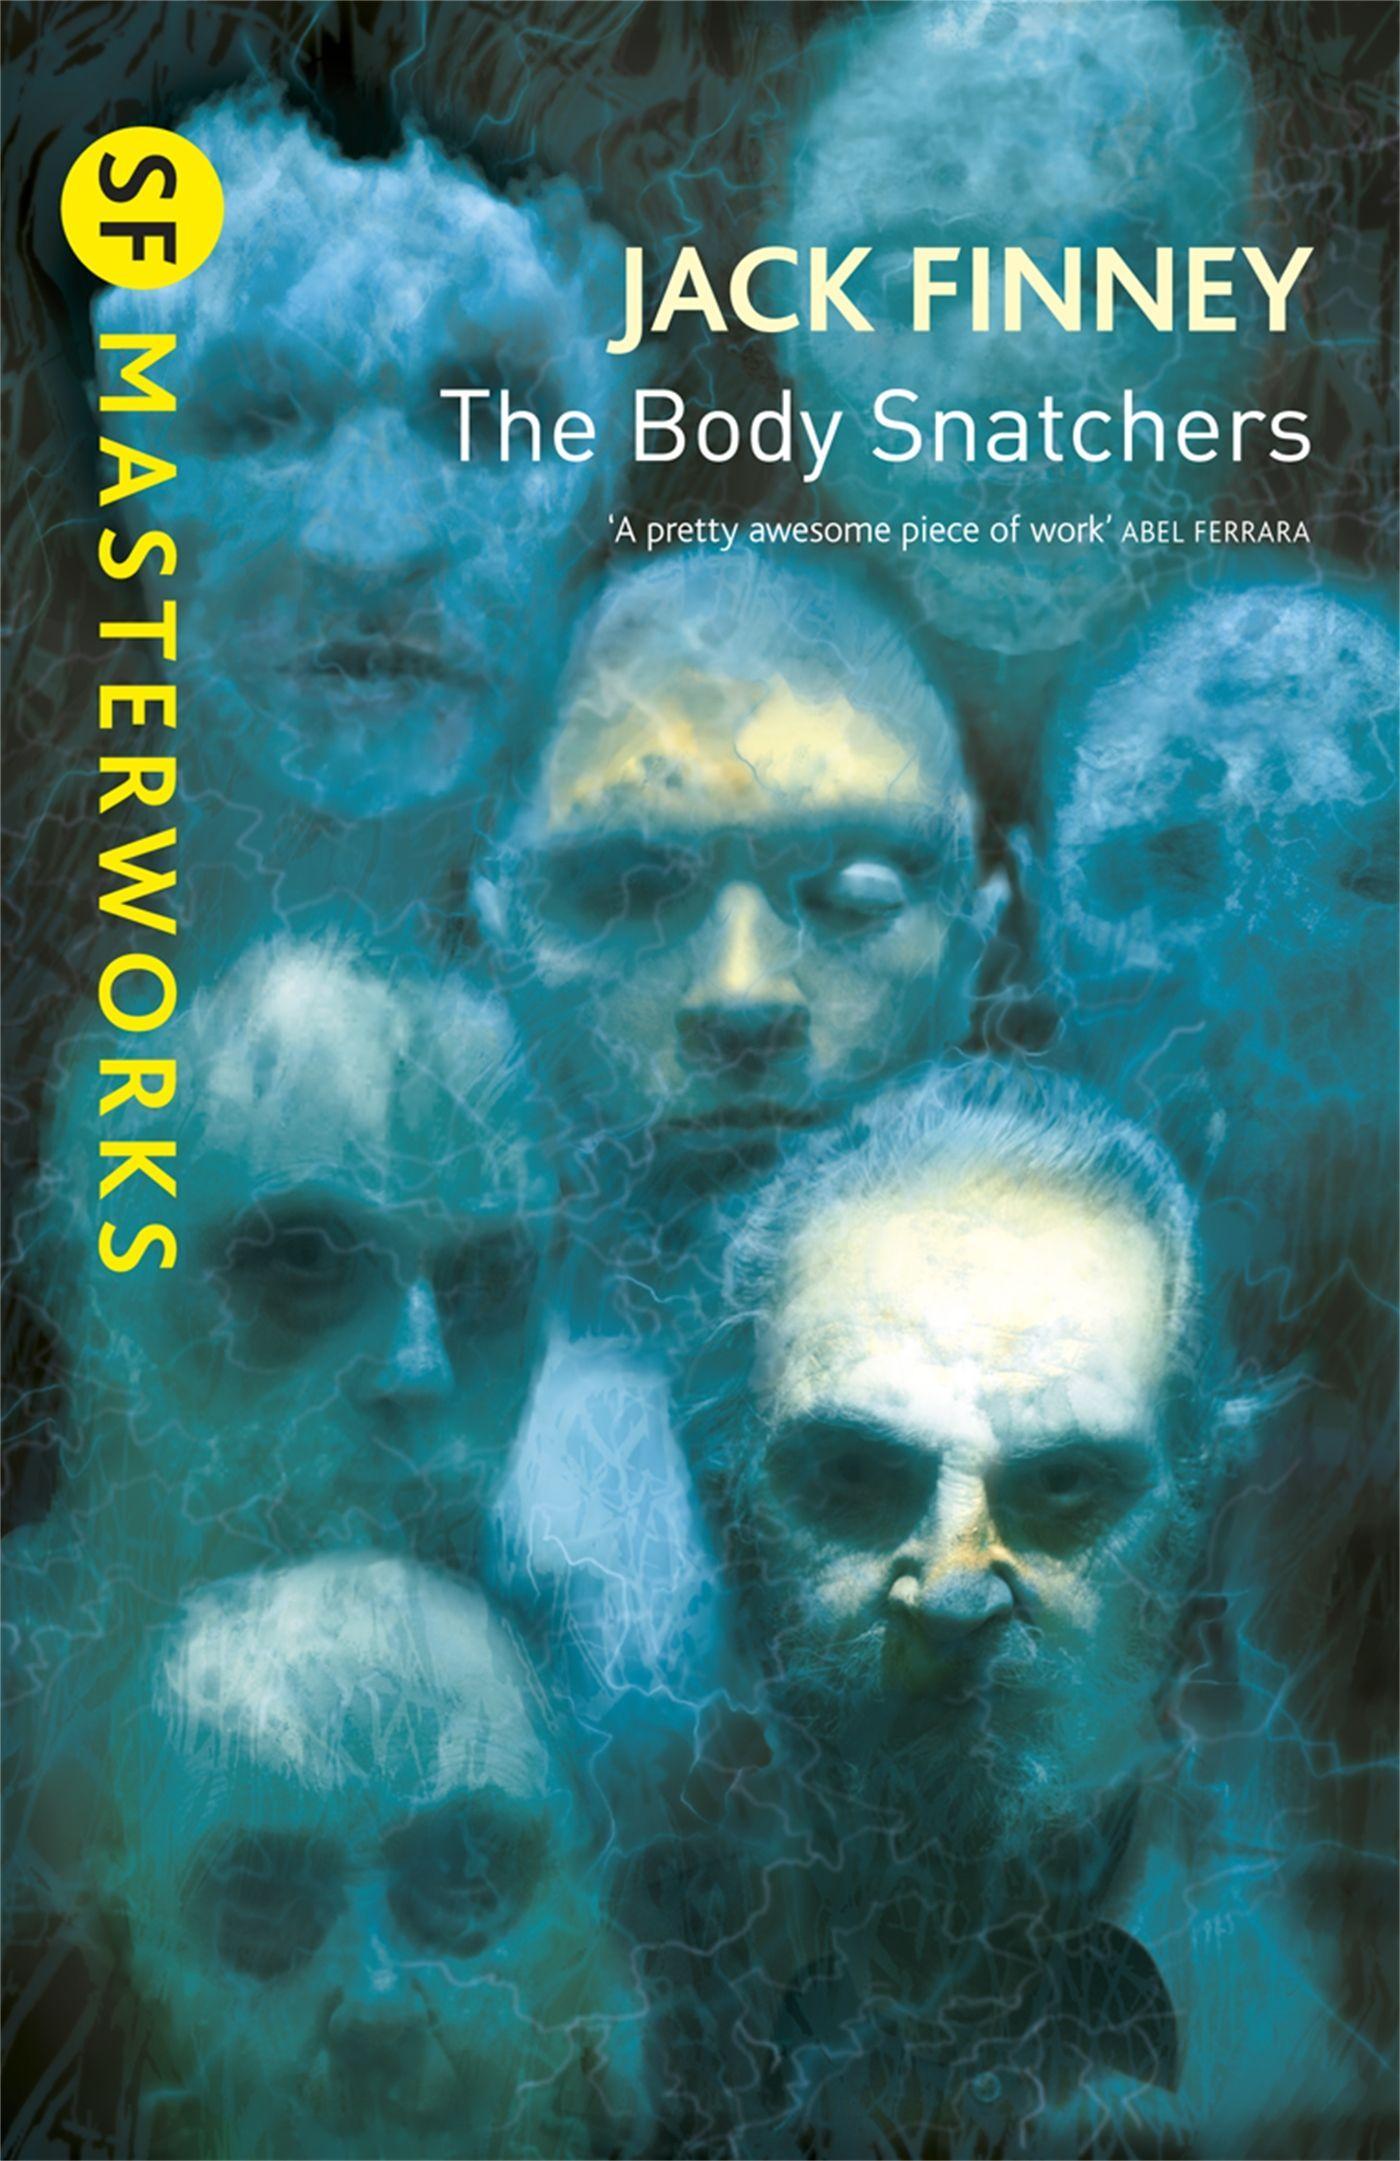 The Body Snatchers / Jack Finney / Taschenbuch / Kartoniert / Broschiert / Englisch / 2010 / Orion Publishing Co / EAN 9780575085312 - Finney, Jack